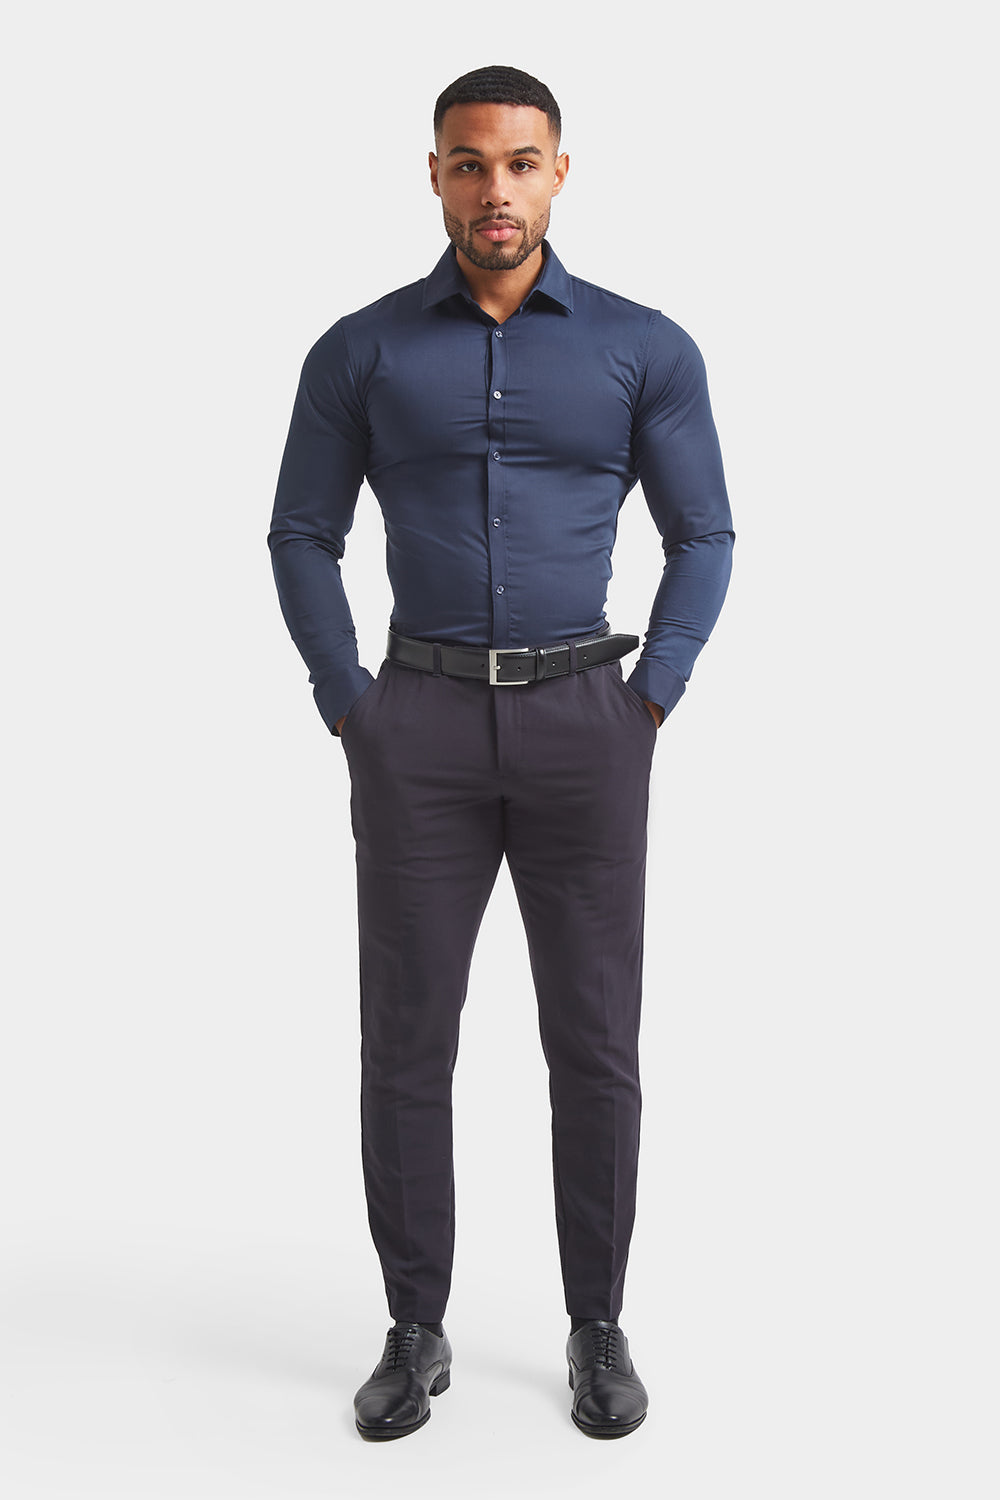 Get Printed Navy Blue Formal Slim Fit Shirt at ₹ 1299 | LBB Shop